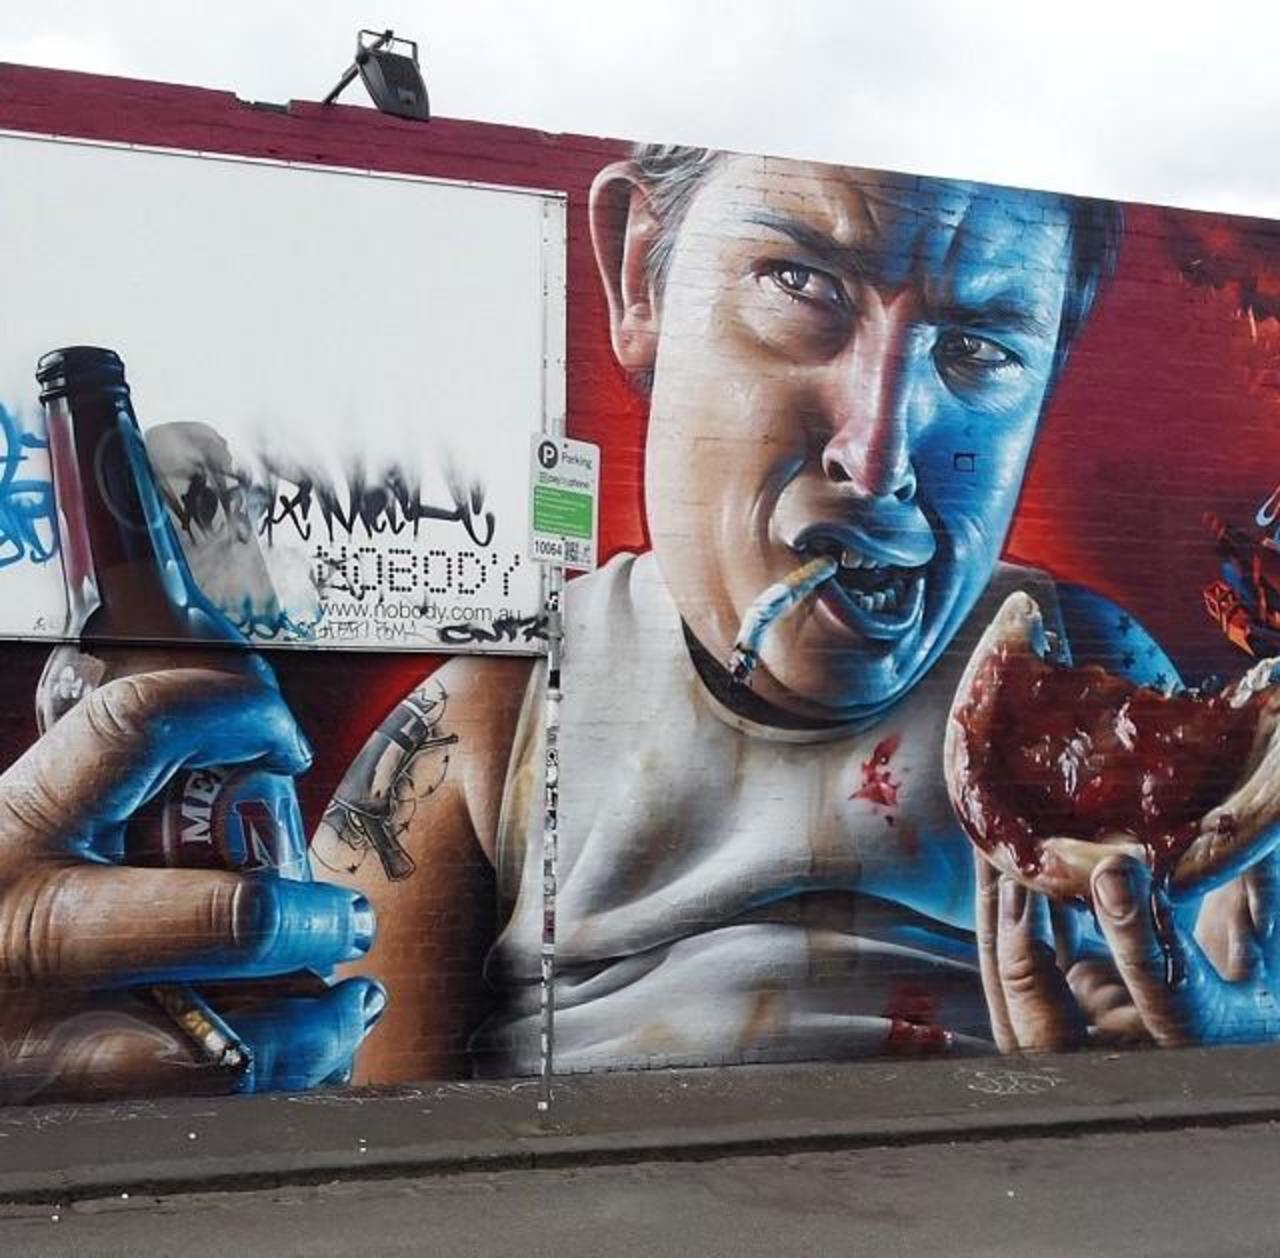 Smug One x Sofles x Adnate hyperrealistic Street Art colab located in Melbourne #art #mural #graffiti #streetart http://t.co/mwSiZMVOpN